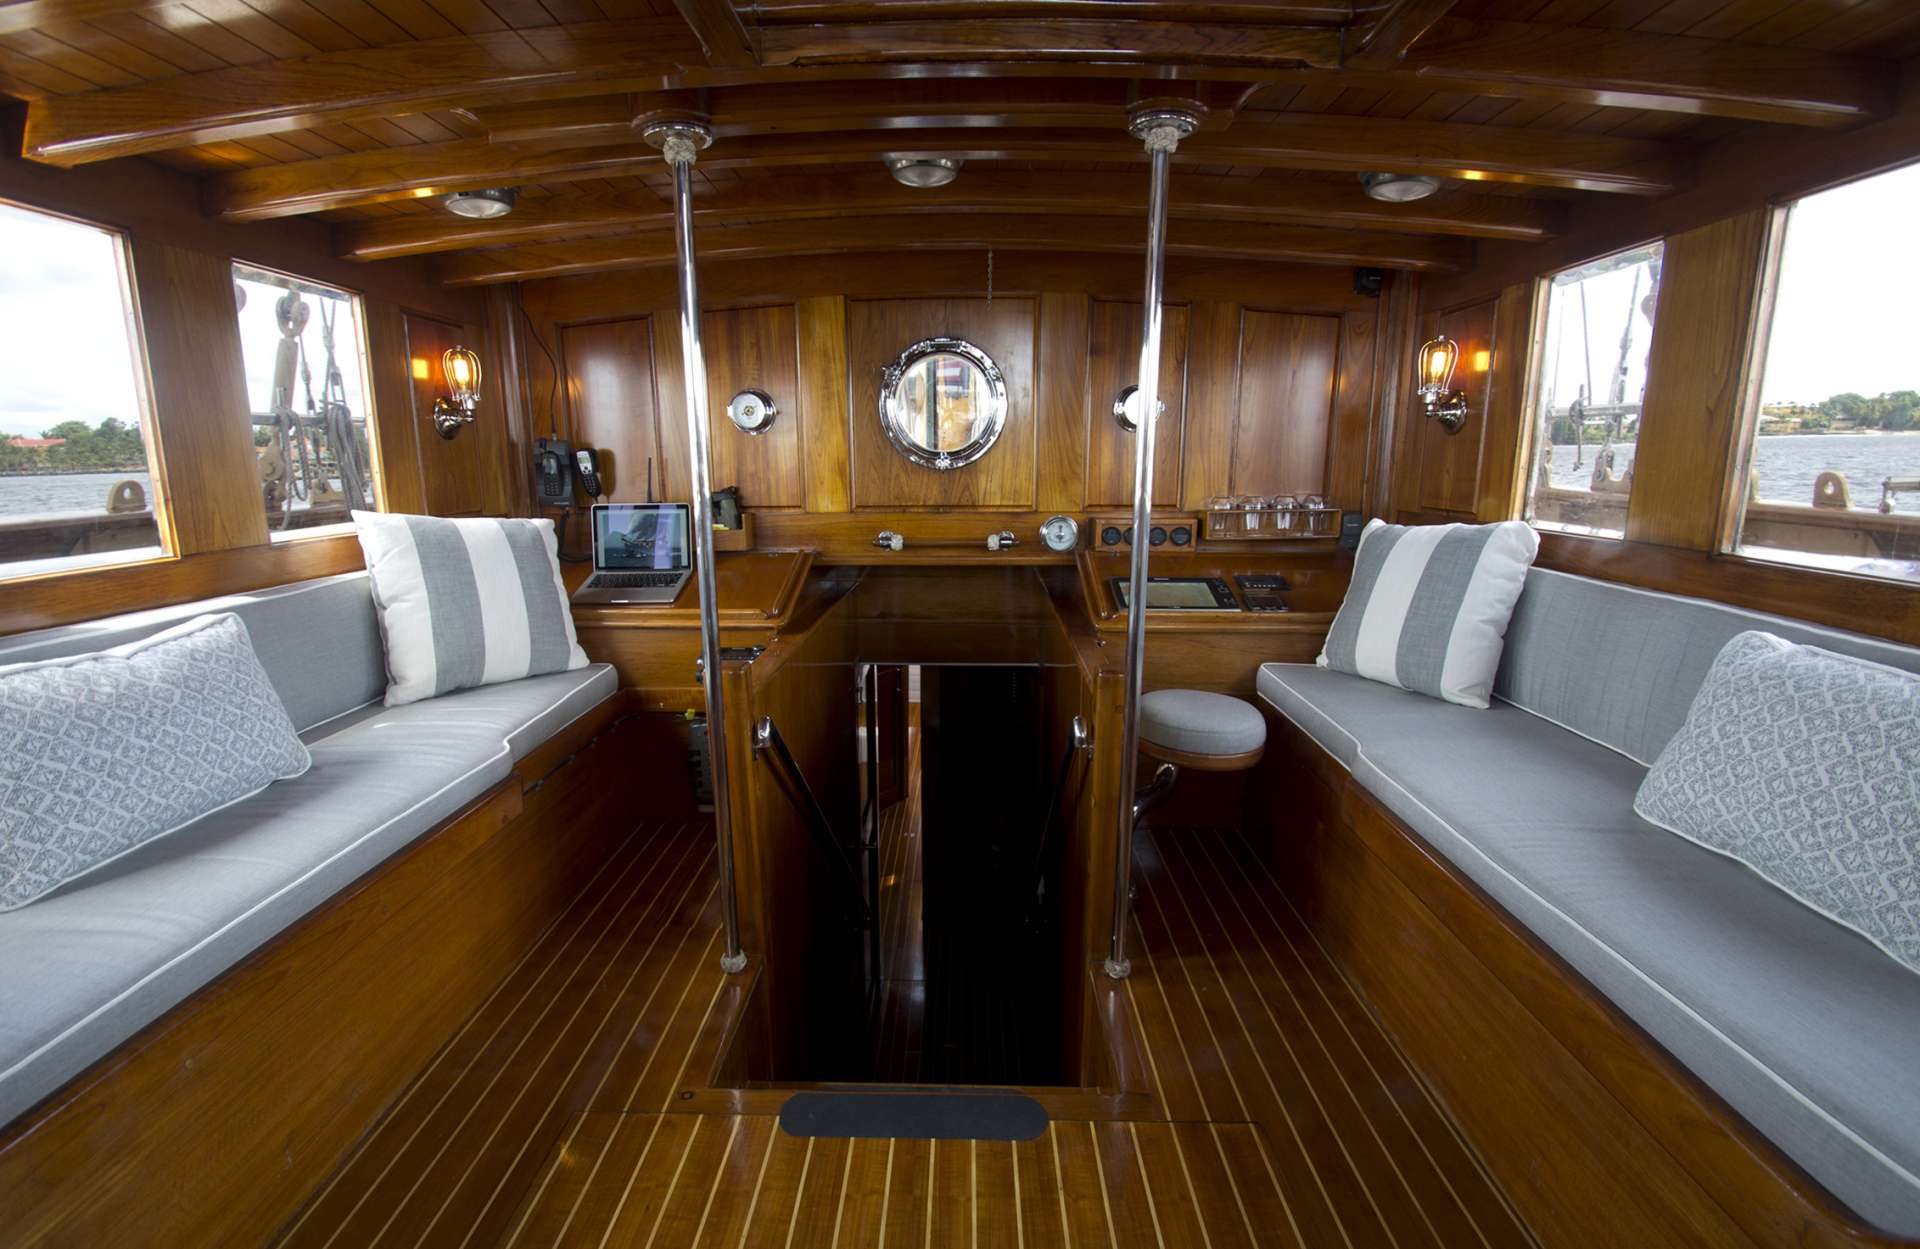 EROS Yacht Charter - Deck house interior